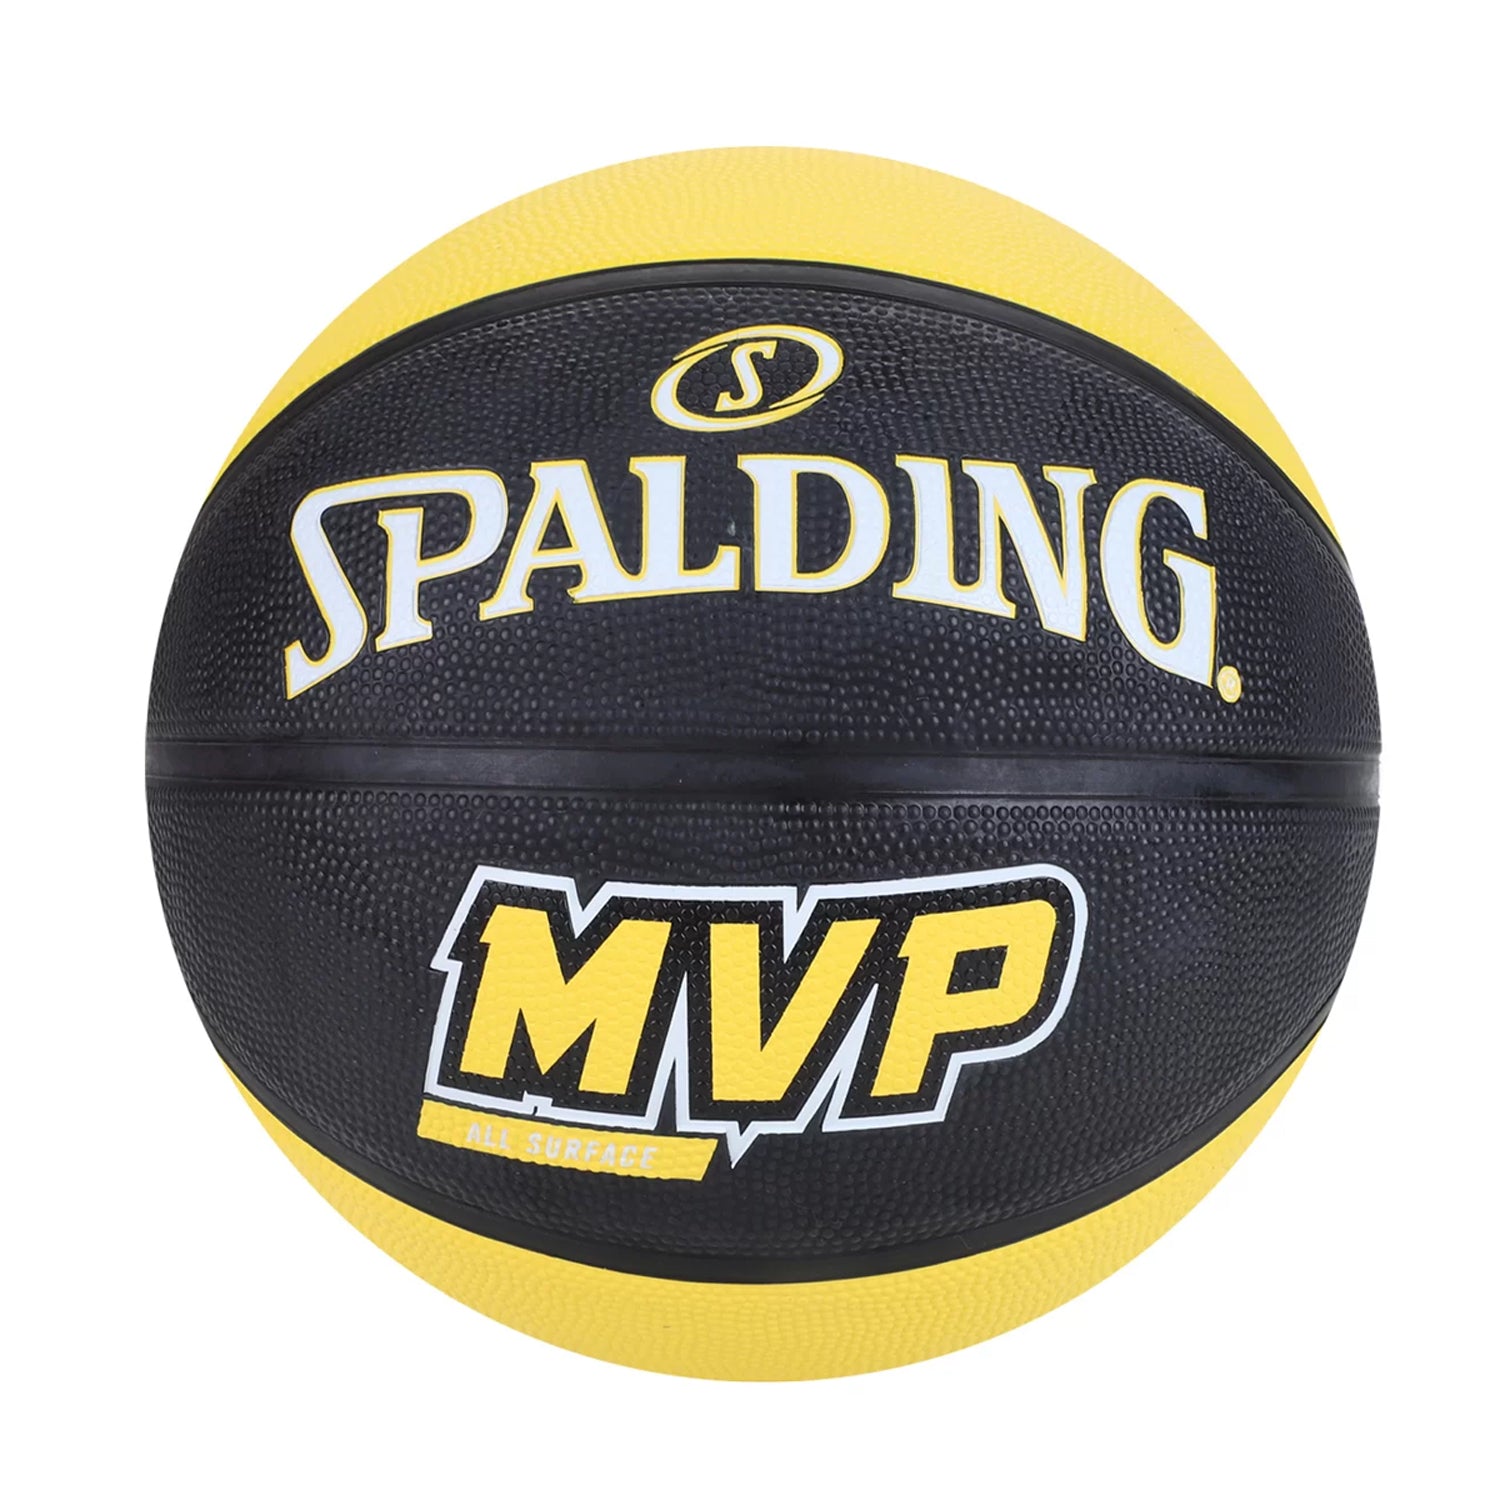 Spalding MVP Rubber Basketball, Size 7 (Yellow/Black) - Best Price online Prokicksports.com